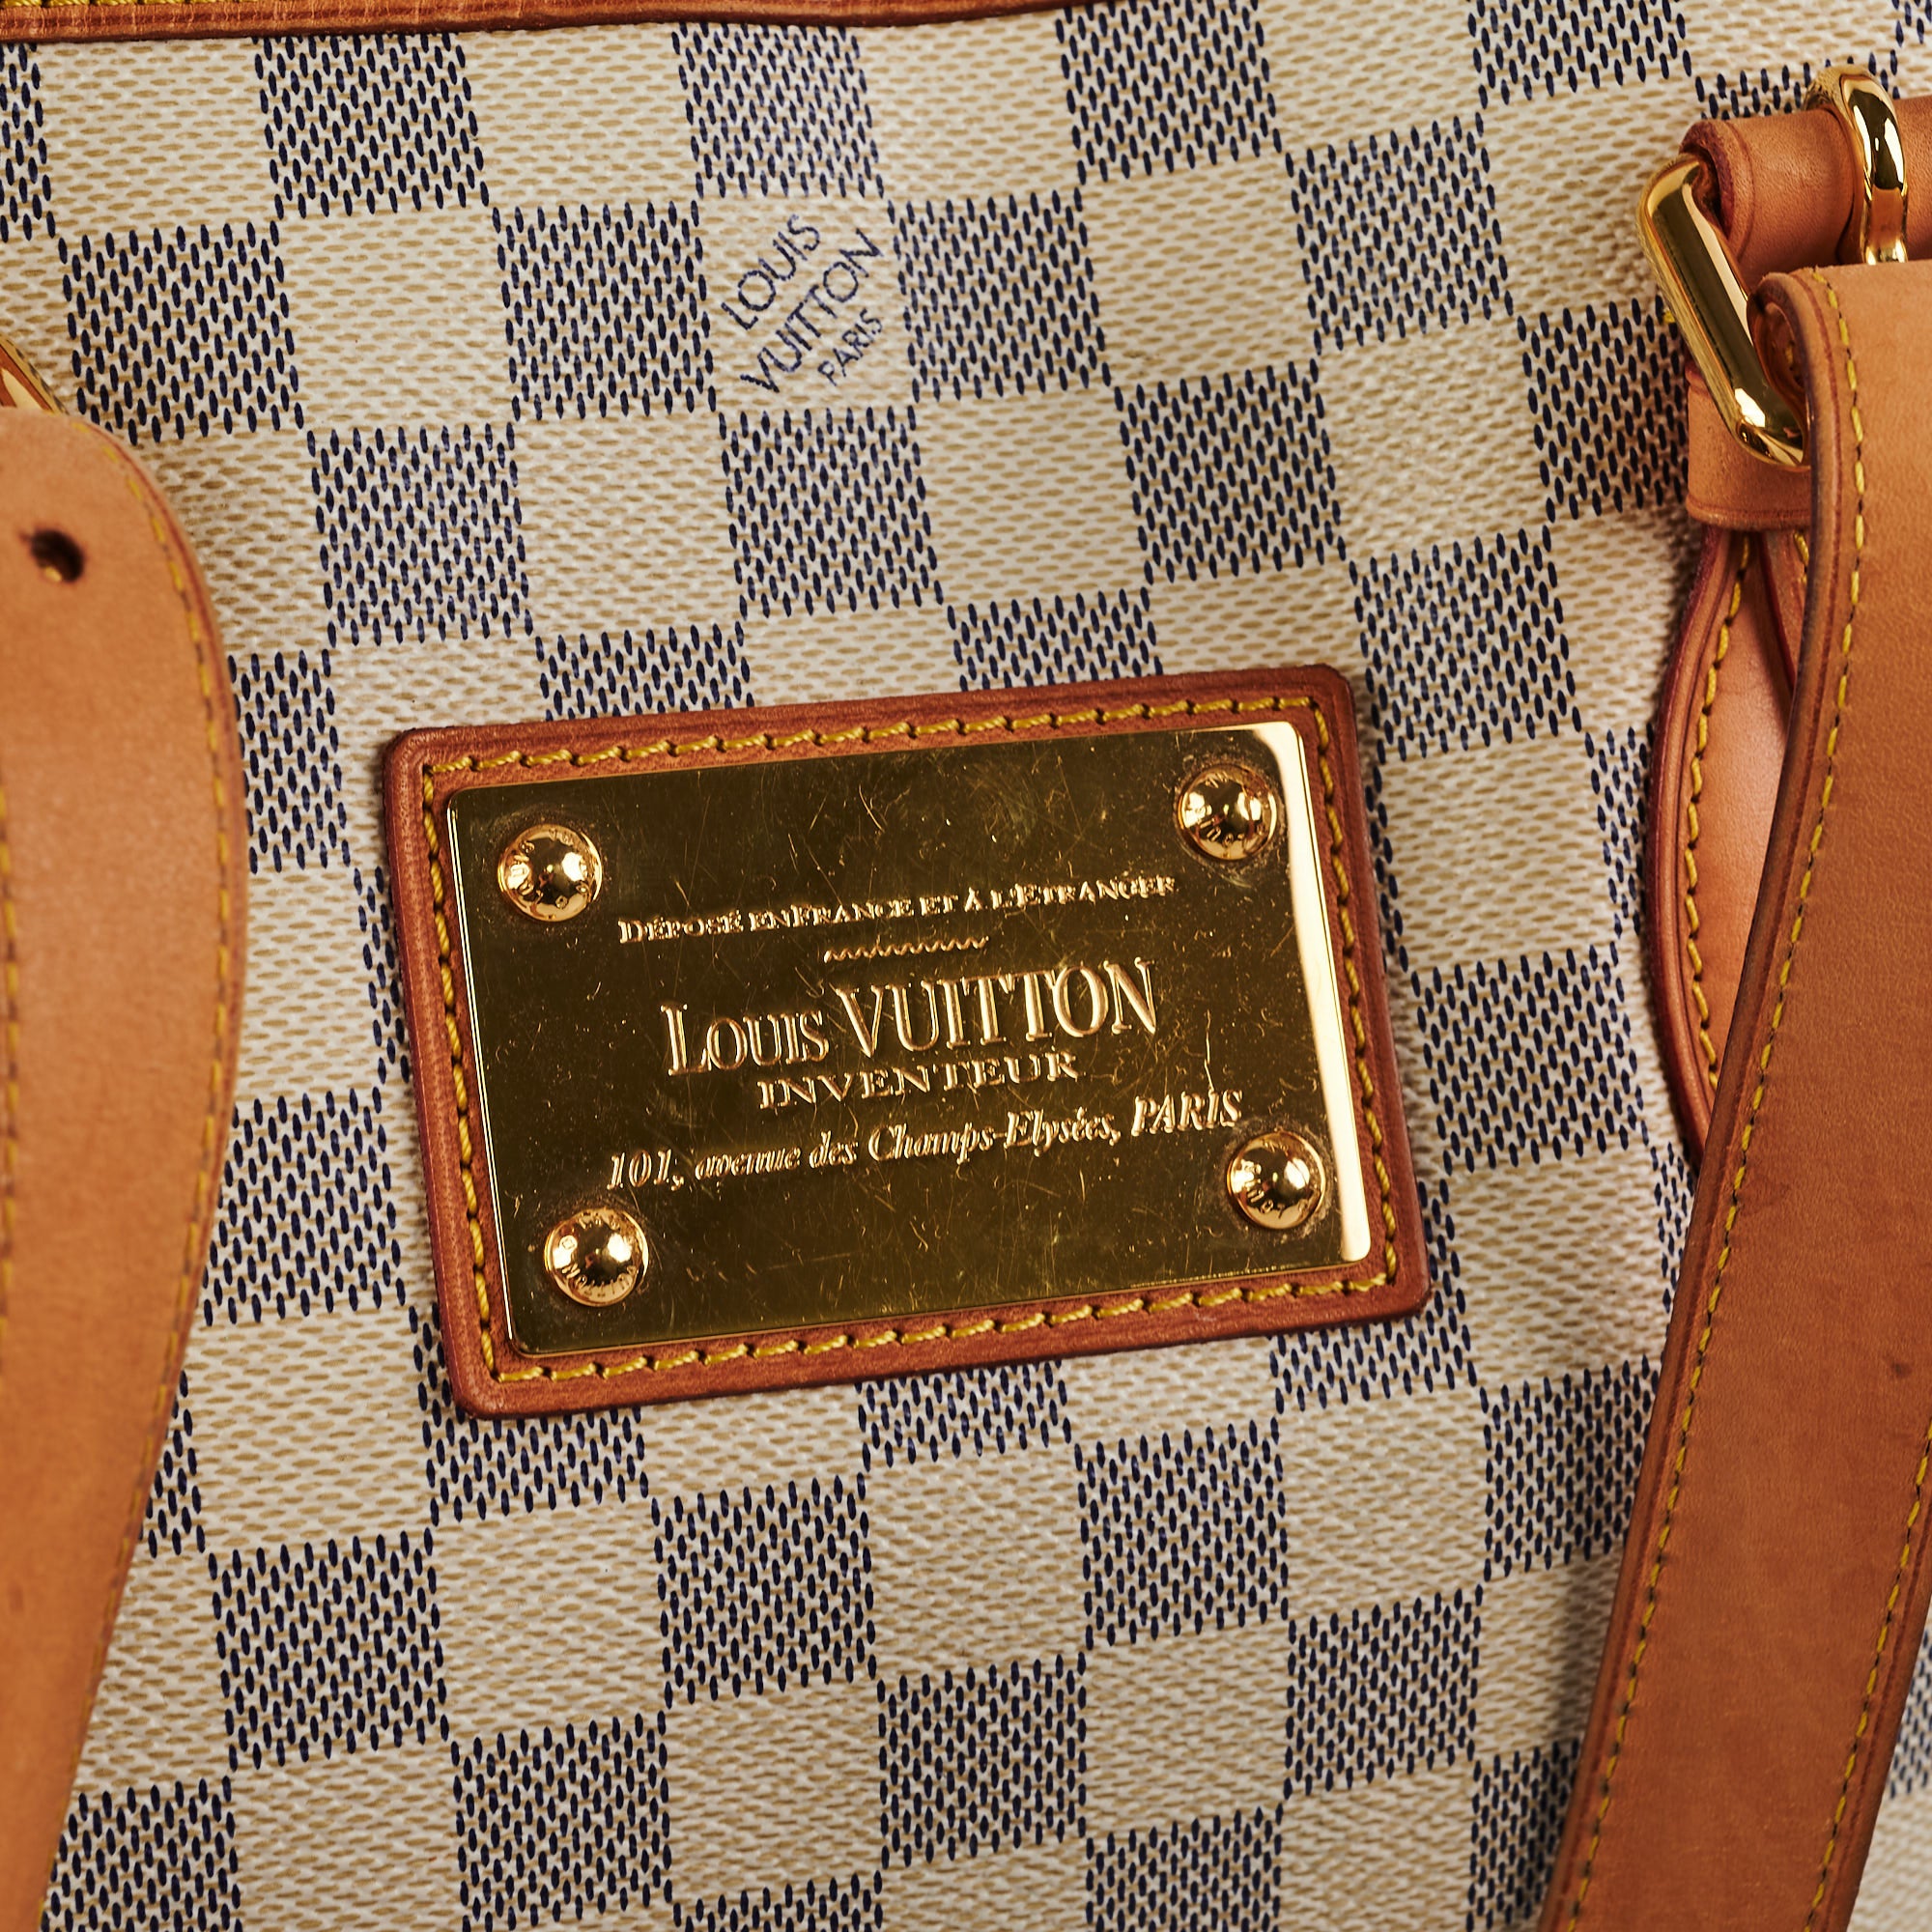 Louis Vuitton Hampstead MM Damier Azur Tote Bag - THE PURSE AFFAIR